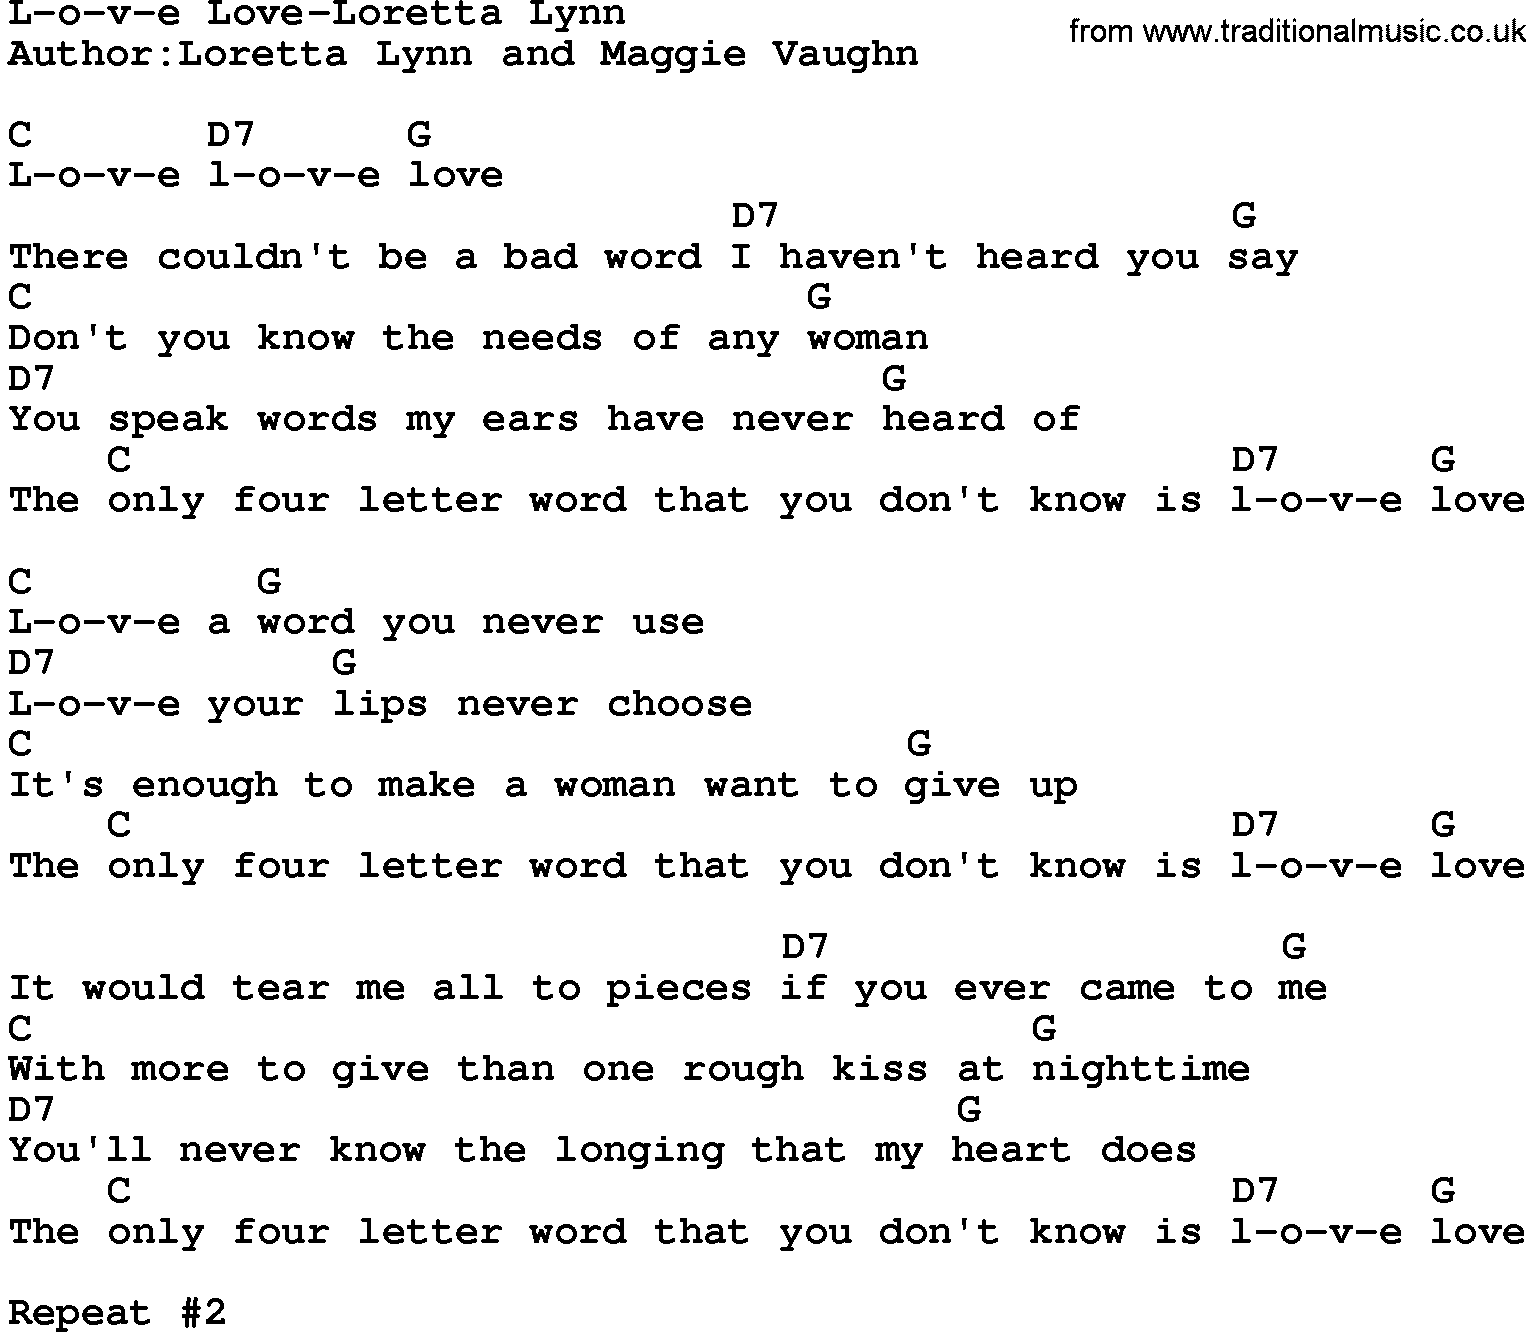 Country music song: L-O-V-E Love-Loretta Lynn lyrics and chords